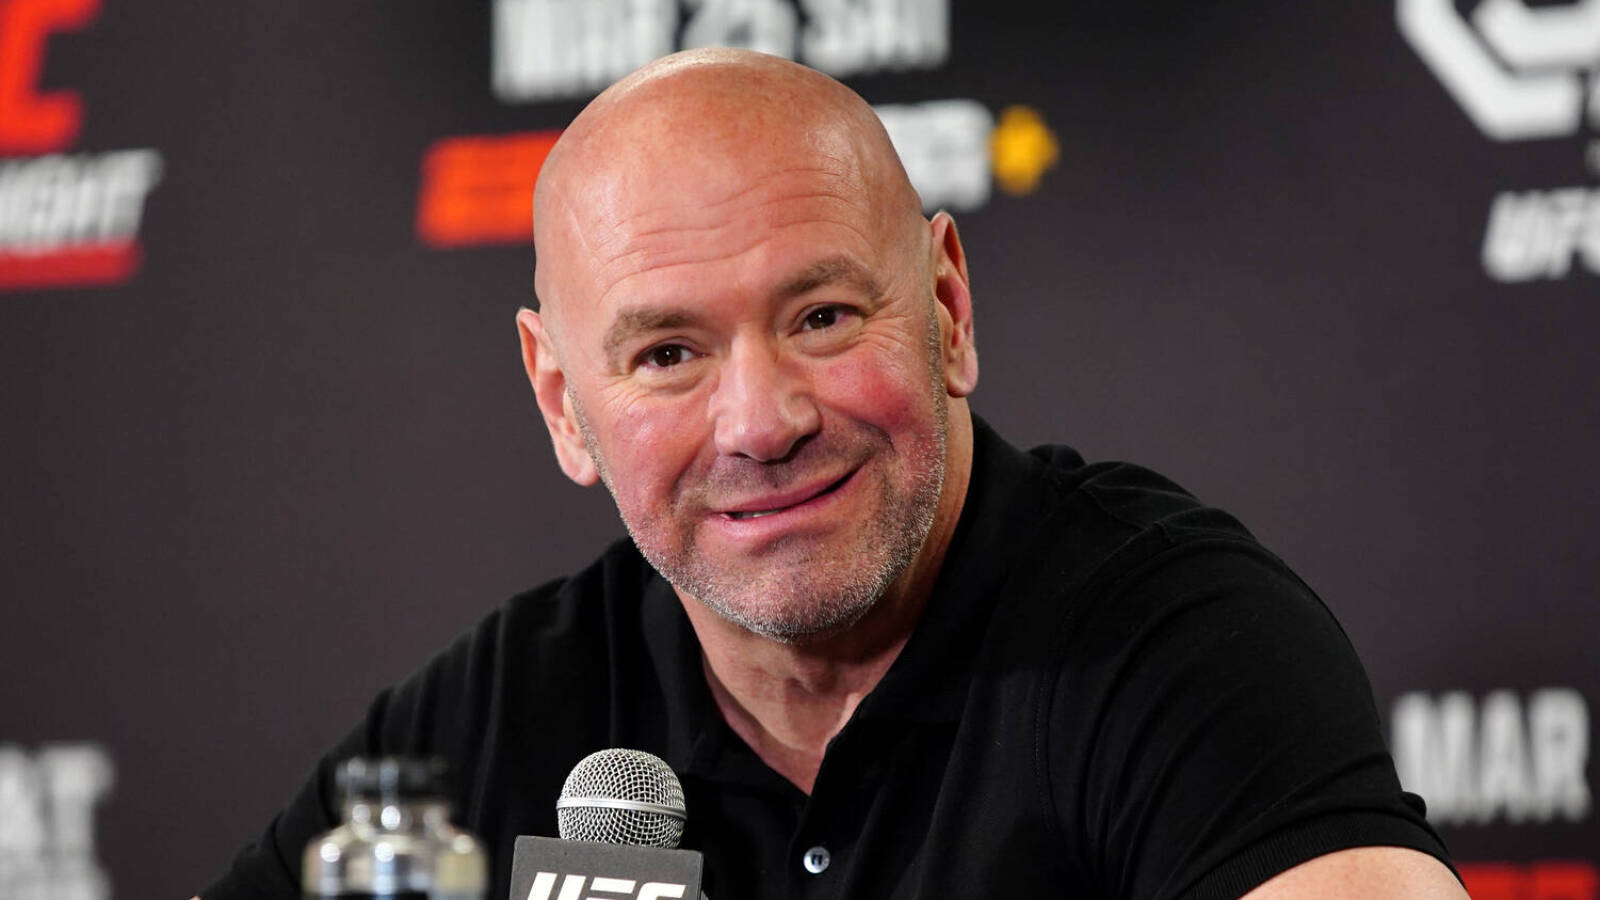 Watch: Sage Steele awkwardly confuses UFC boss Dana White with Joe Rogan